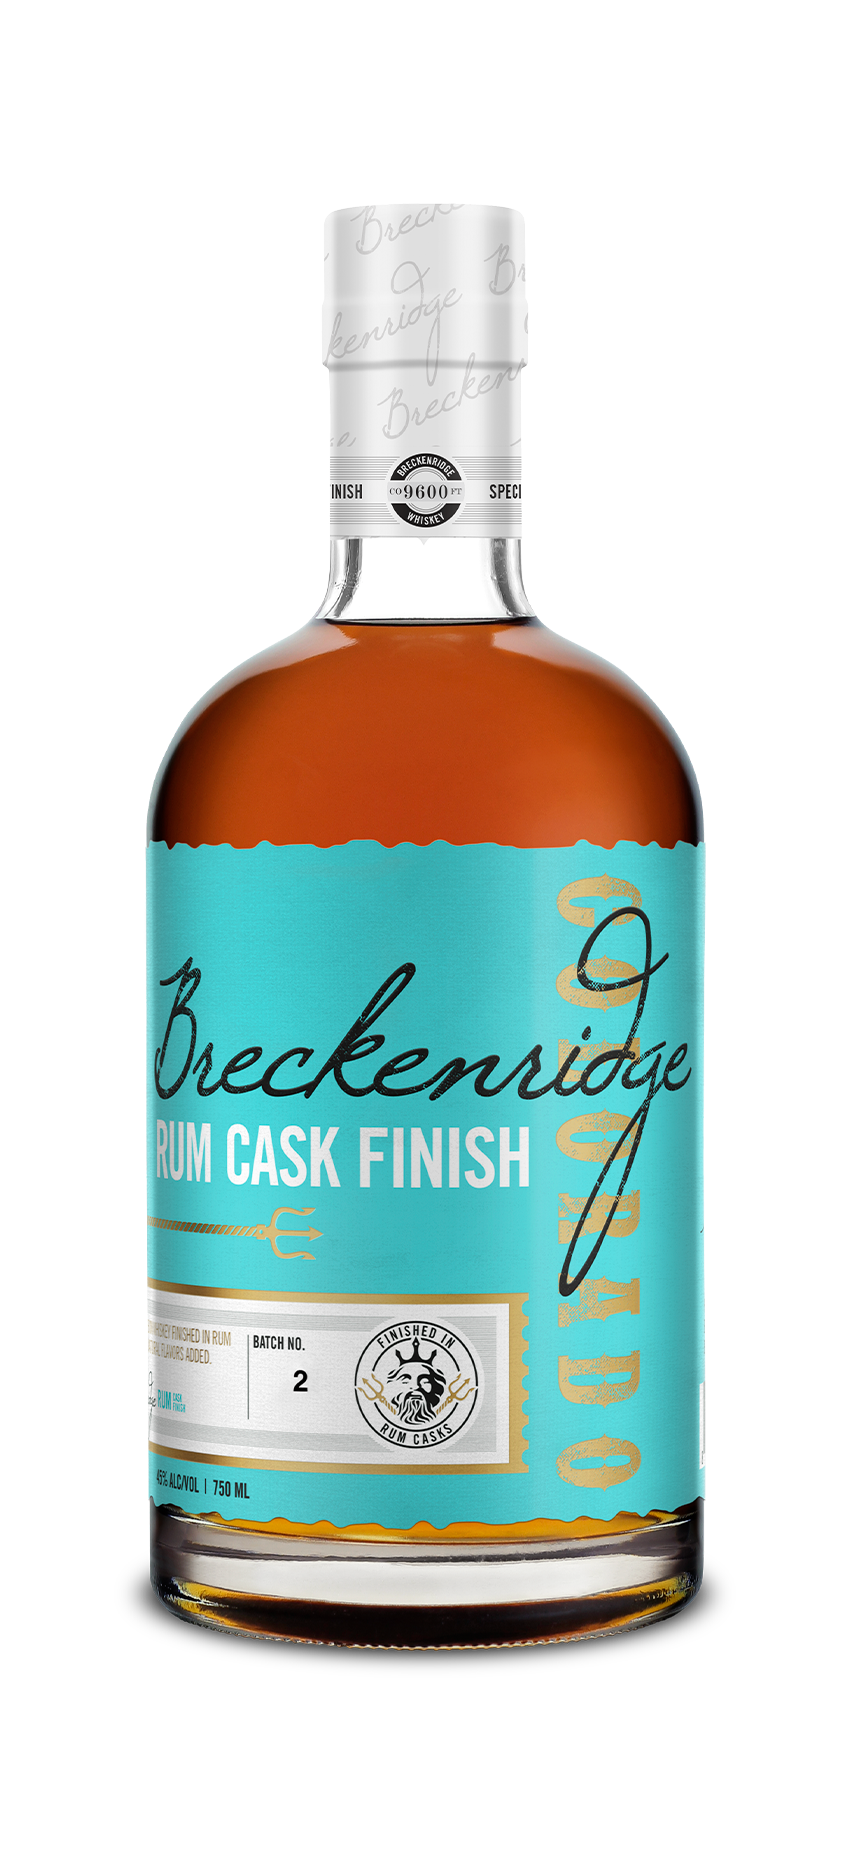 Breckenridge Rum Cask Finish bottle 750 mL